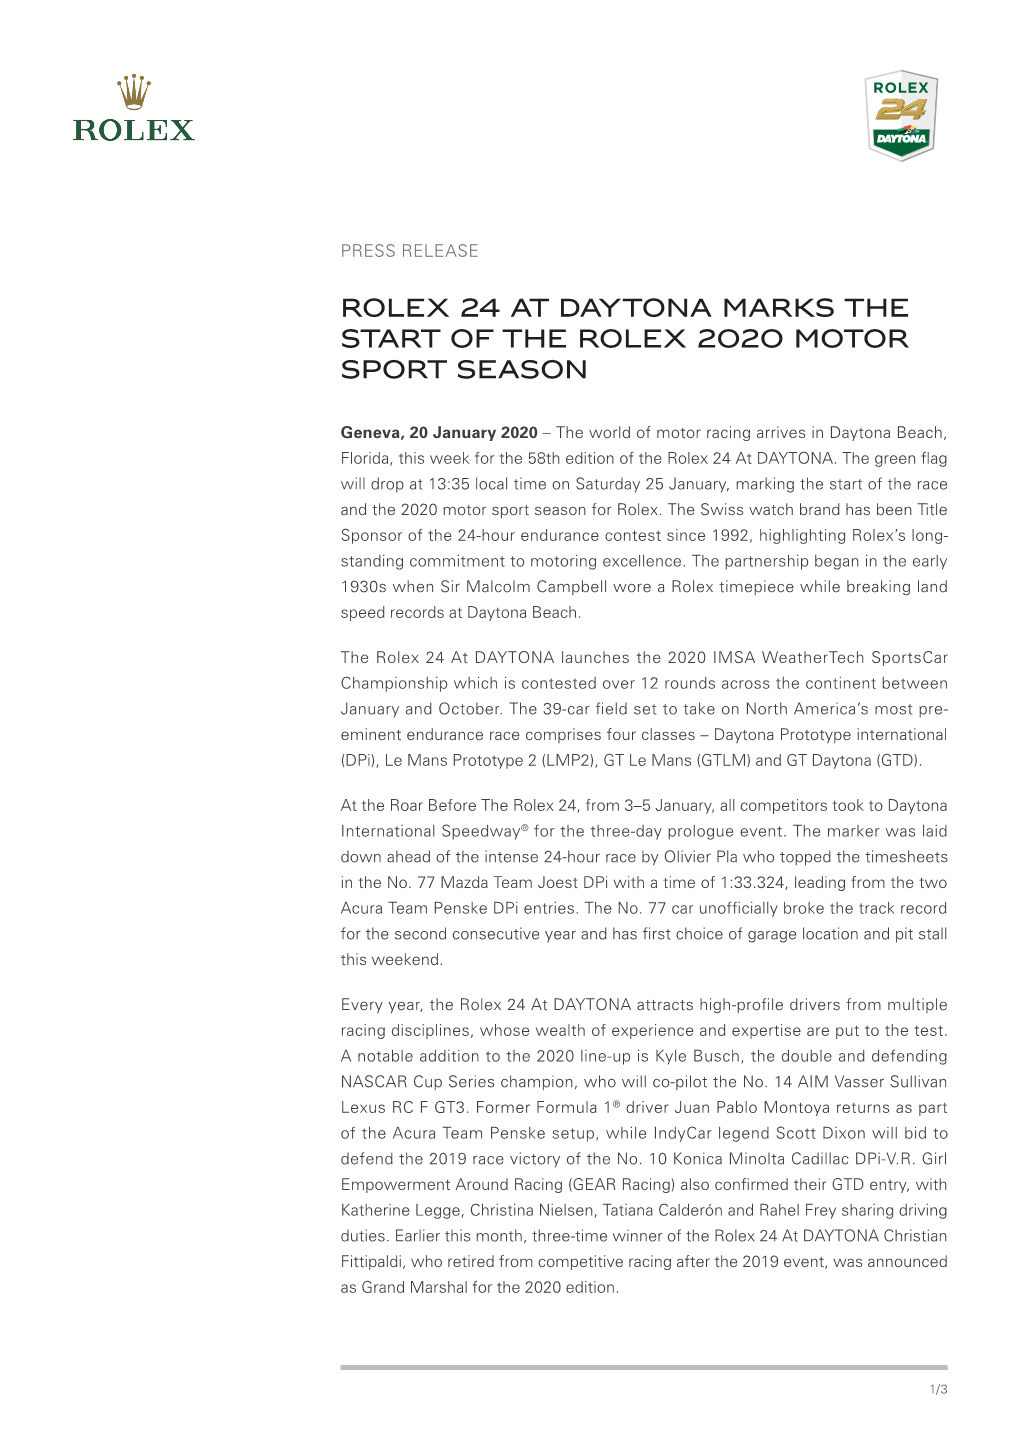 Rolex 24 at Daytona Marks the Start of the Rolex 2020 Motor Sport Season